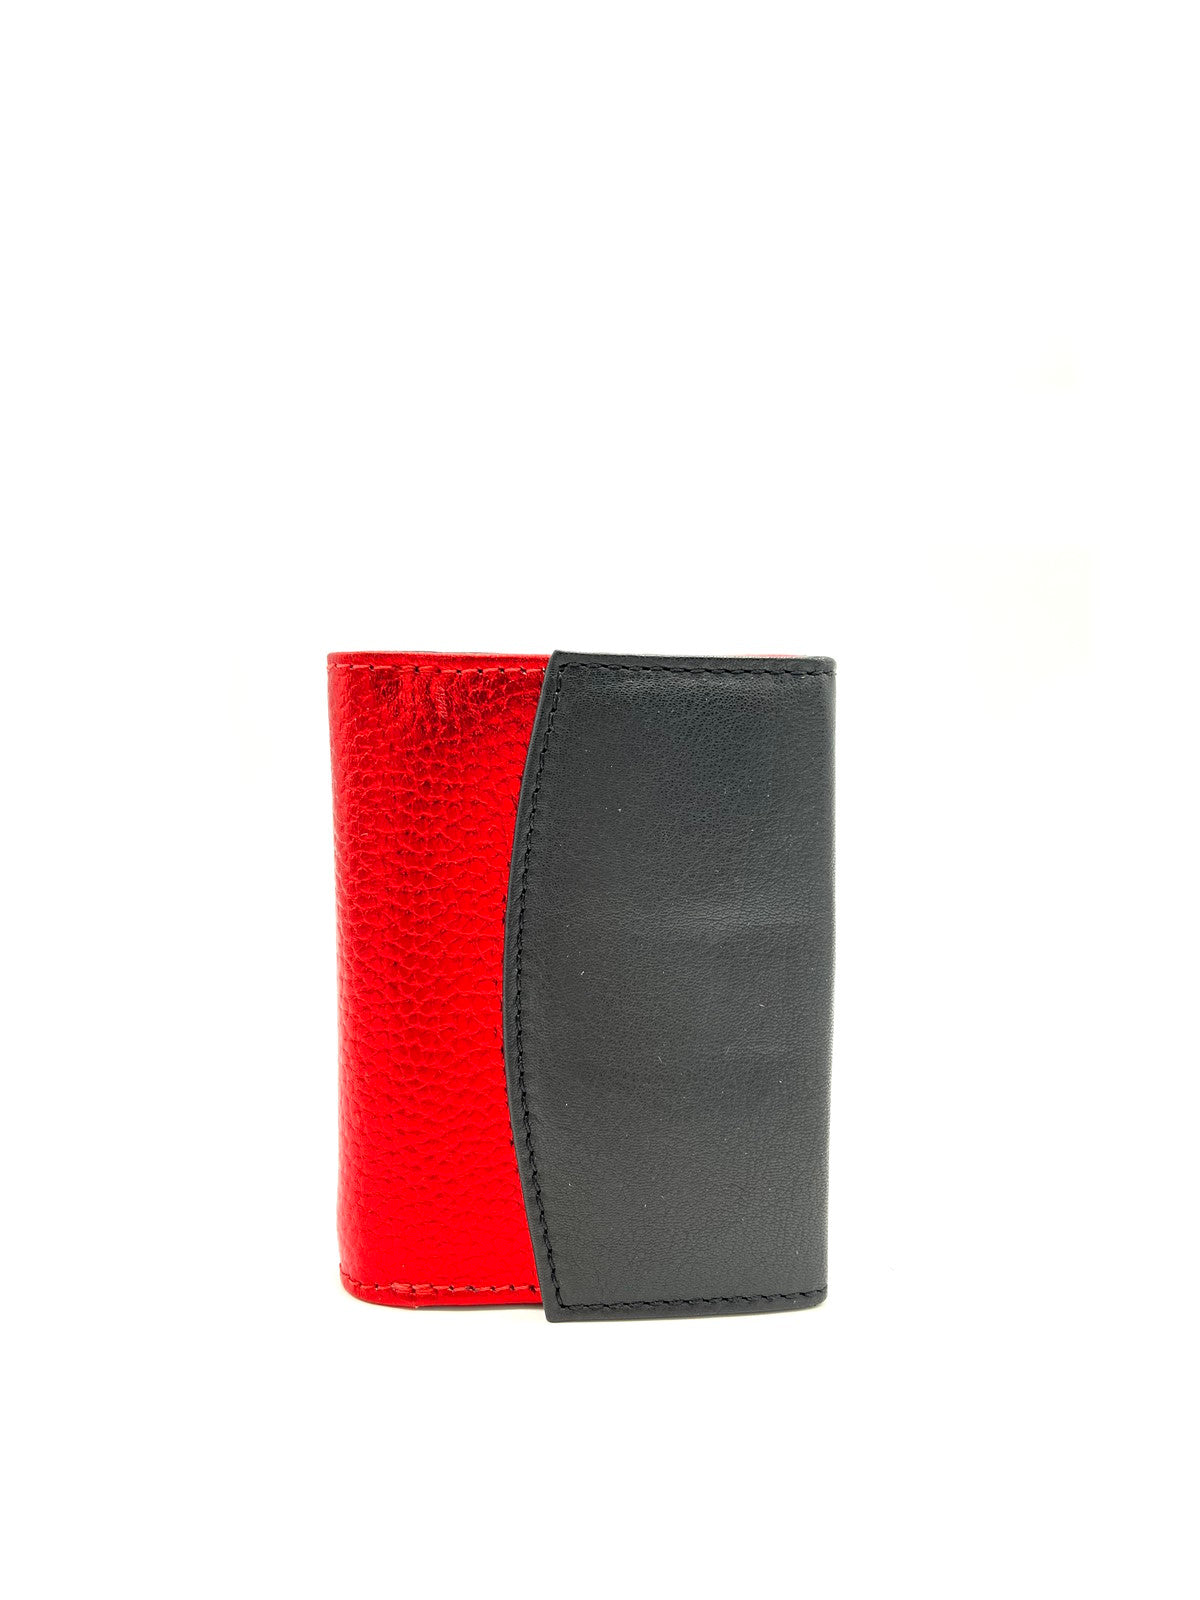 Metallic laminated leather card holder wallet, for women, art. 305.486